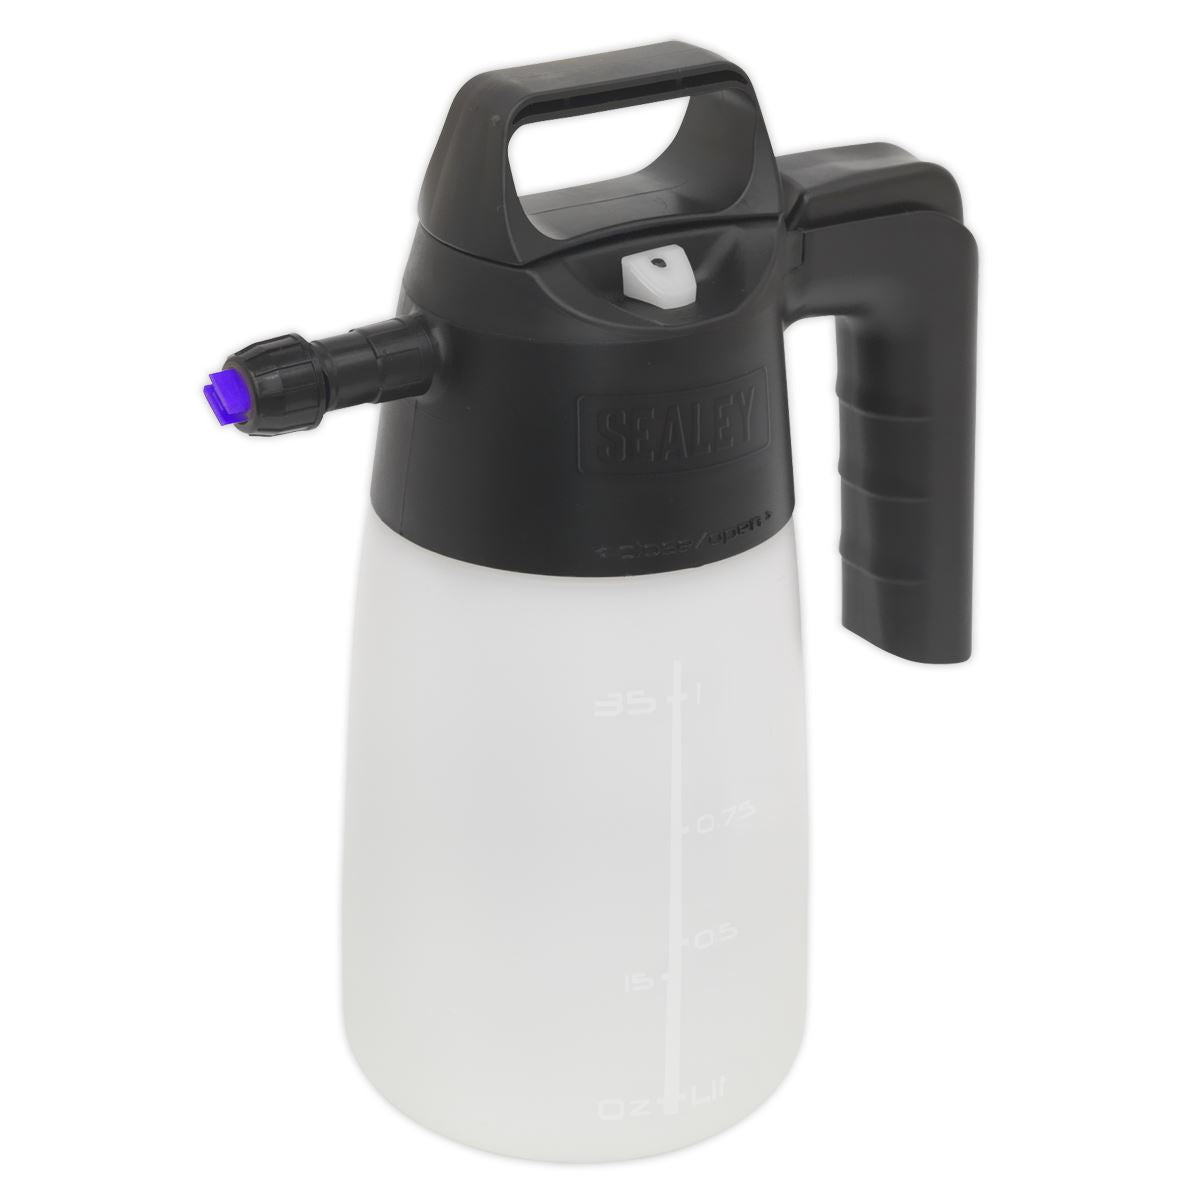 Sealey Premier Premier Industrial Disinfectant/Foam Pressure Sprayer